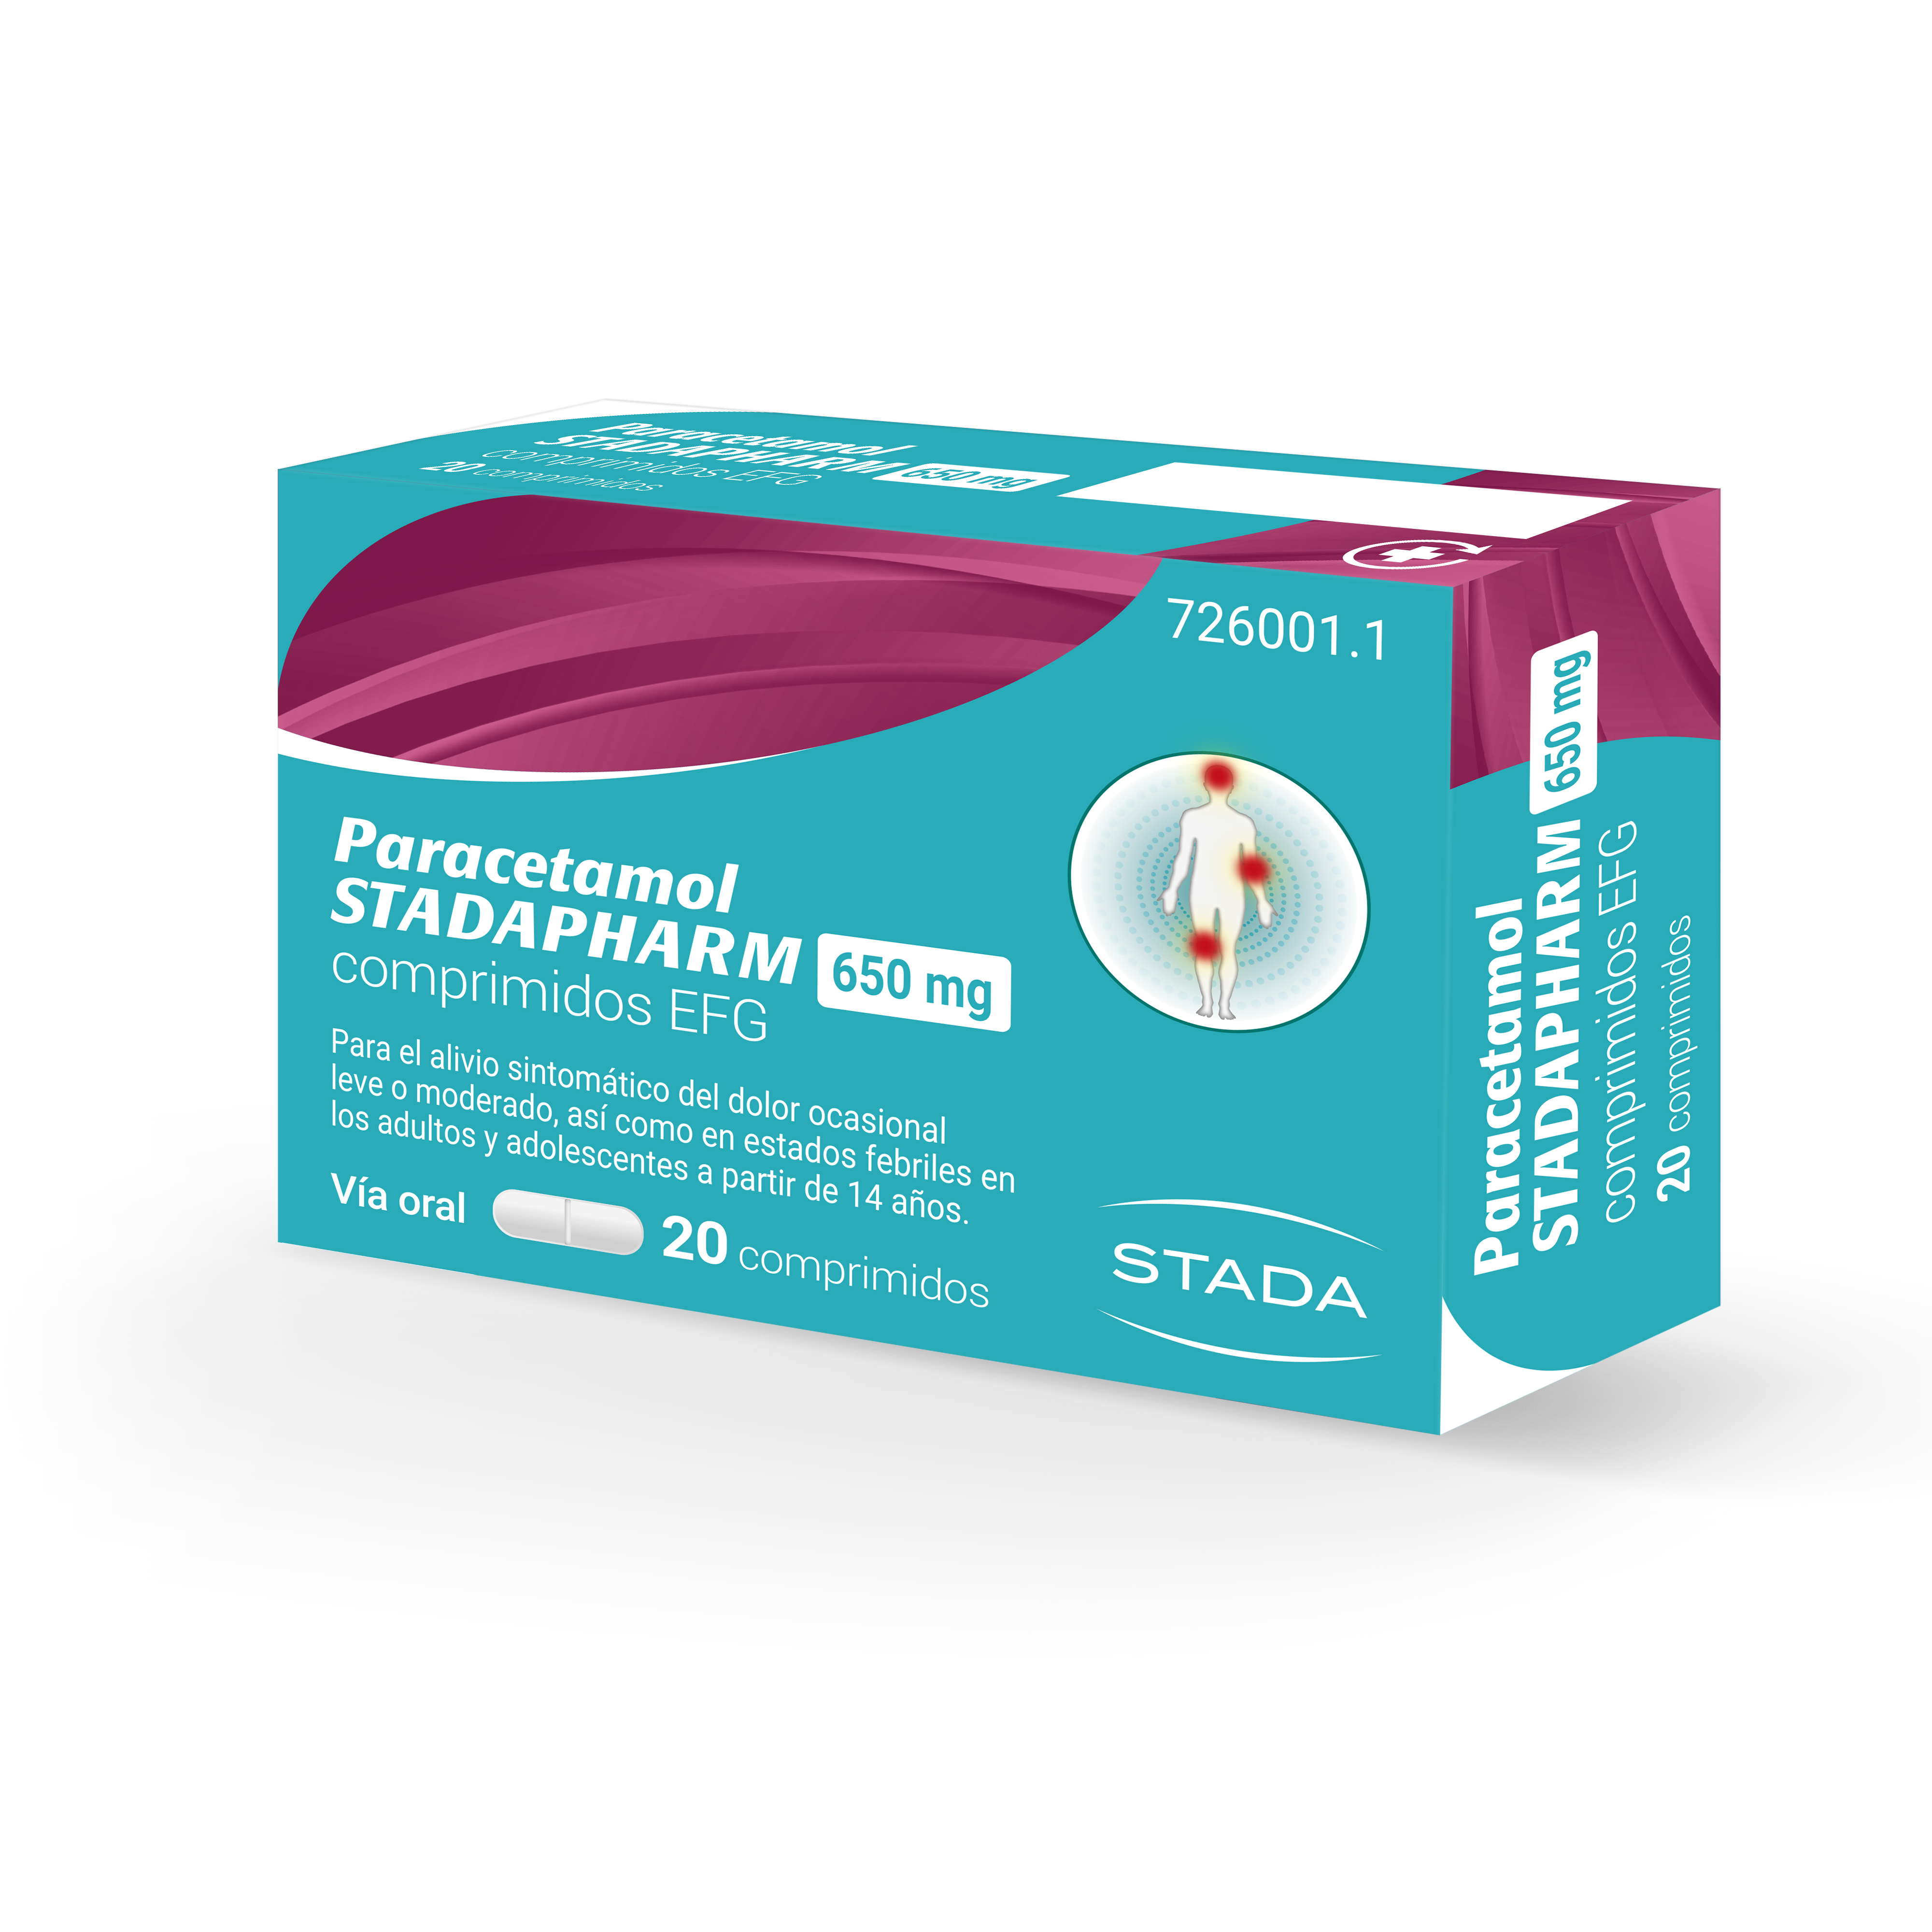 Paracetamol STADAPHARM 650 mg 20 comprimidos EFG